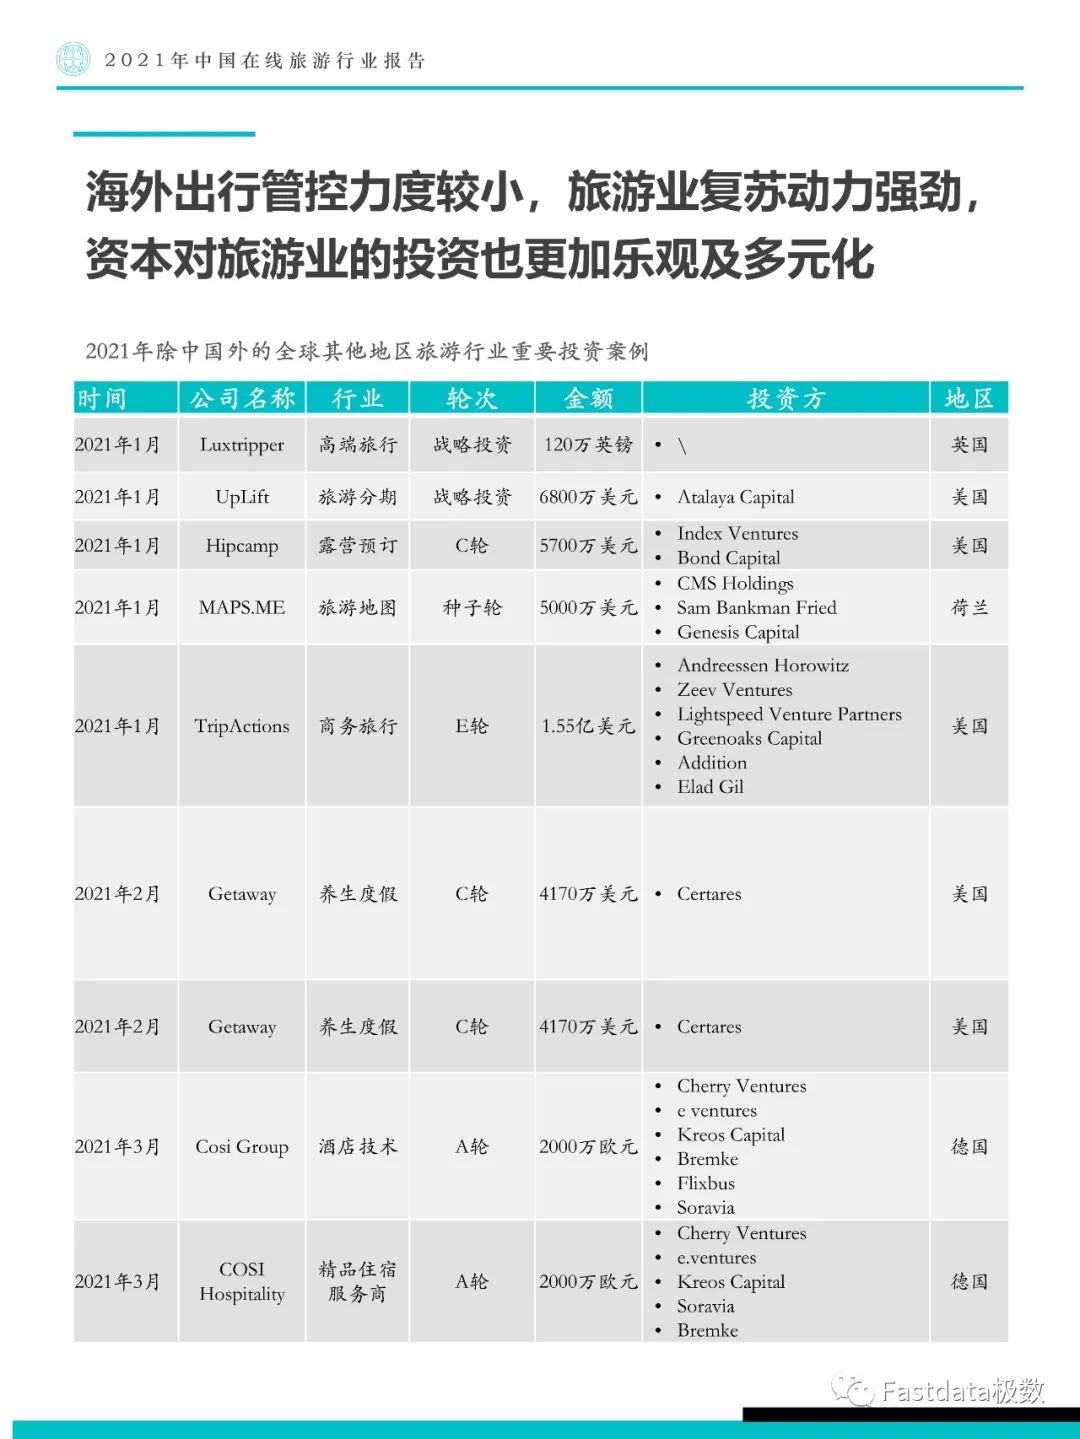 Fastdata极数：2021年中国在线旅游行业报告